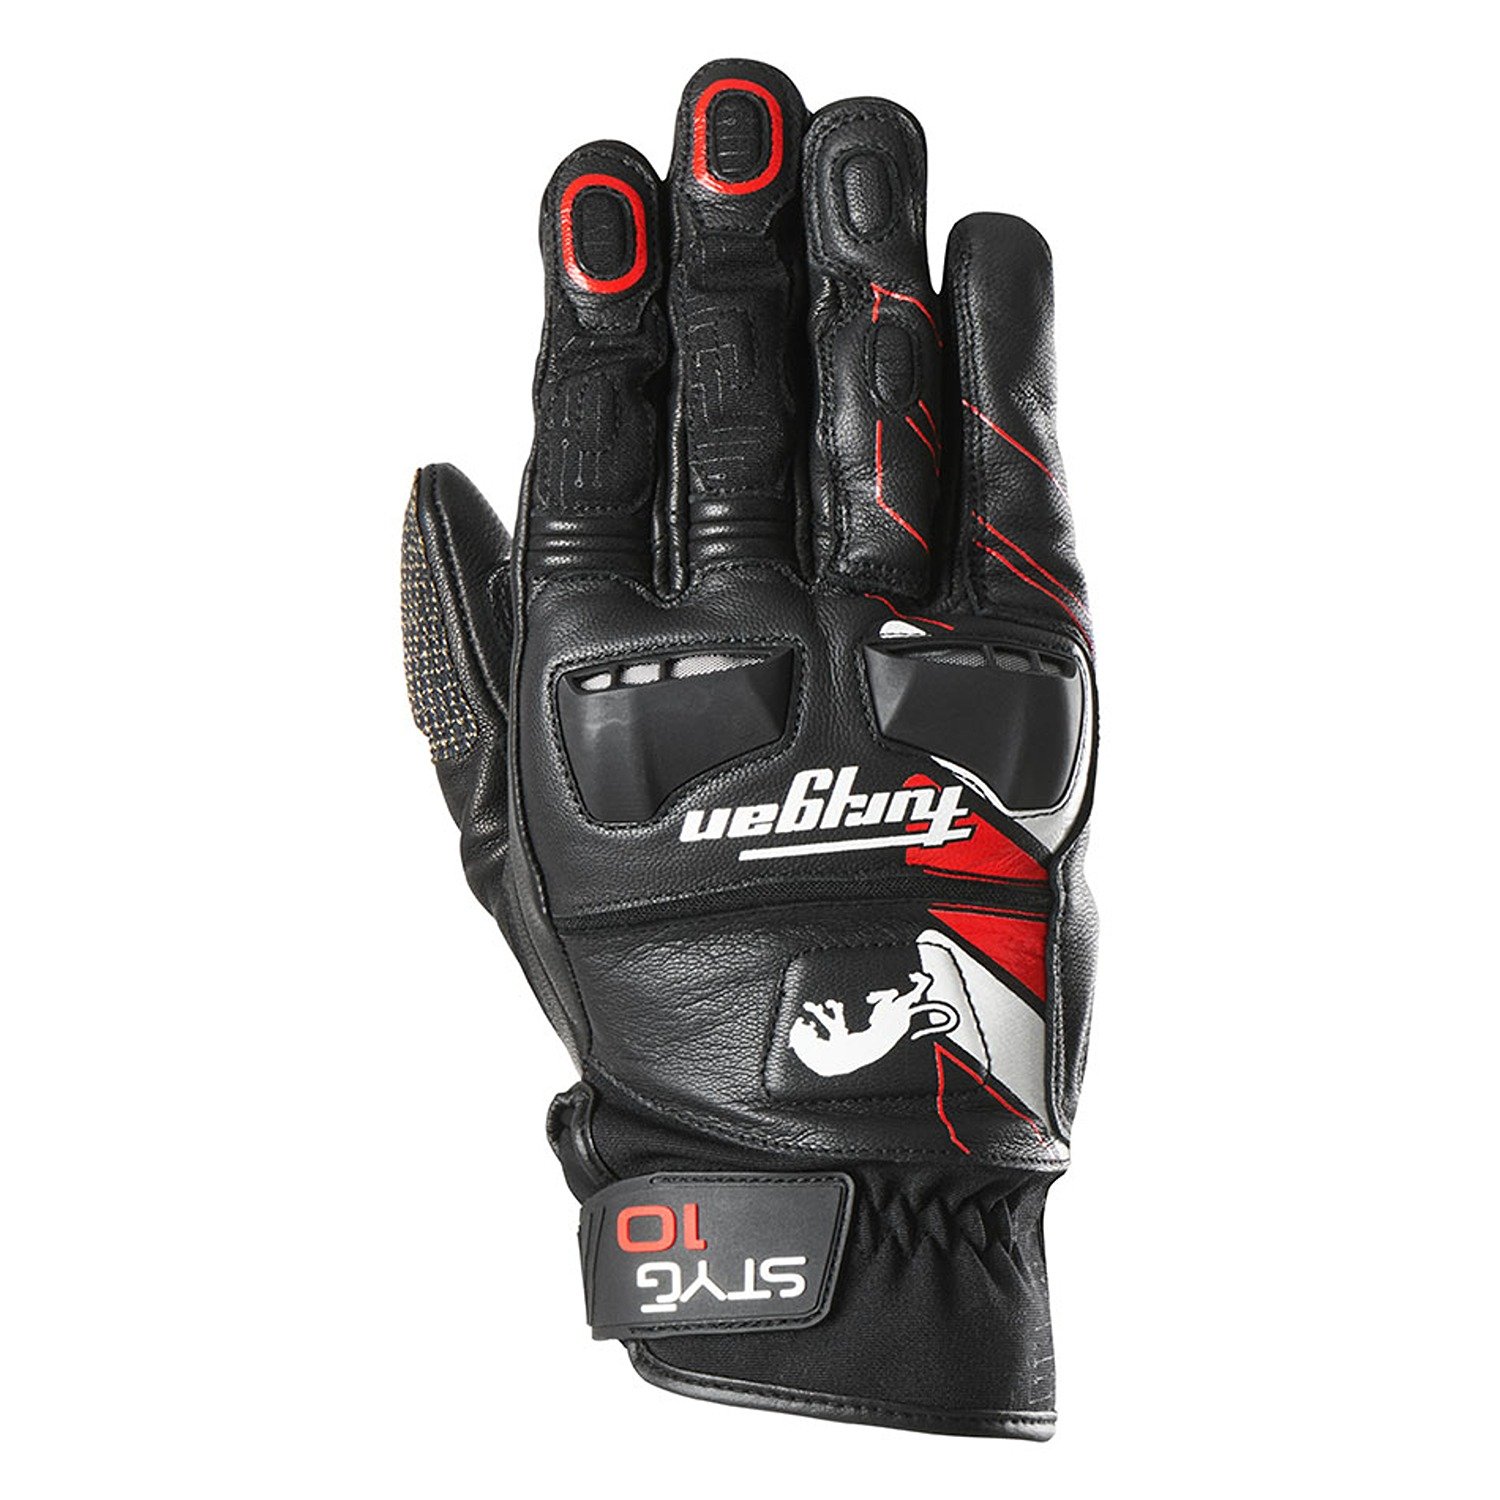 Image of Furygan Styg10 Gloves Black White Red Size L ID 3435980385040